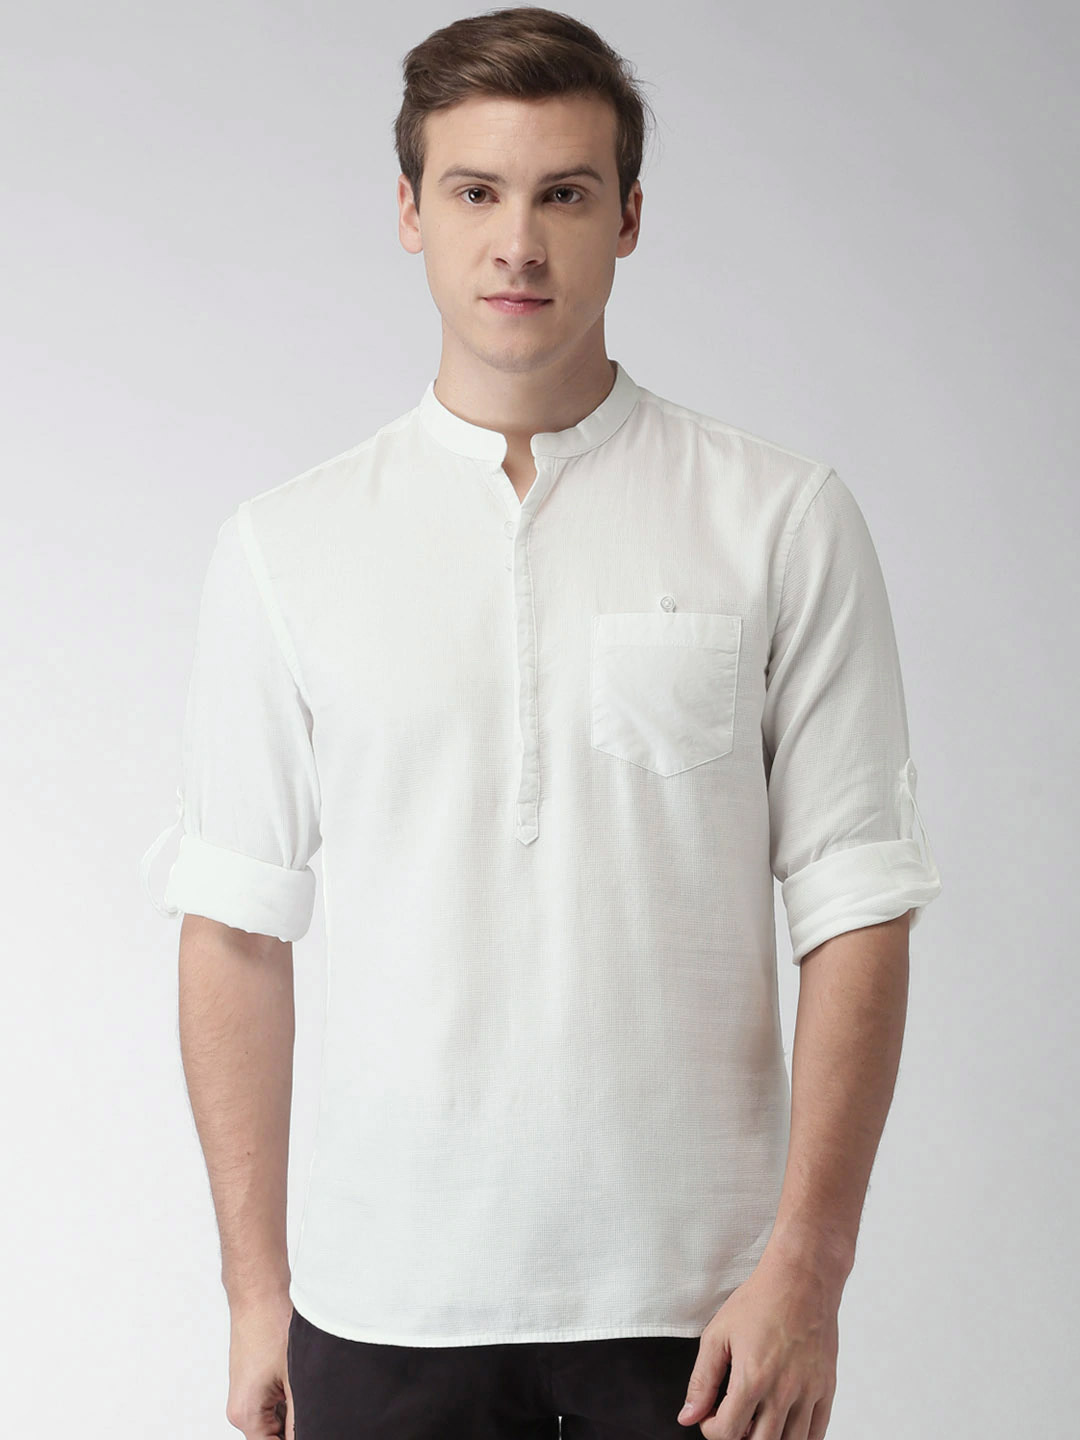 Celio white solid cotton shirt - G3-MCS8009 | G3fashion.com